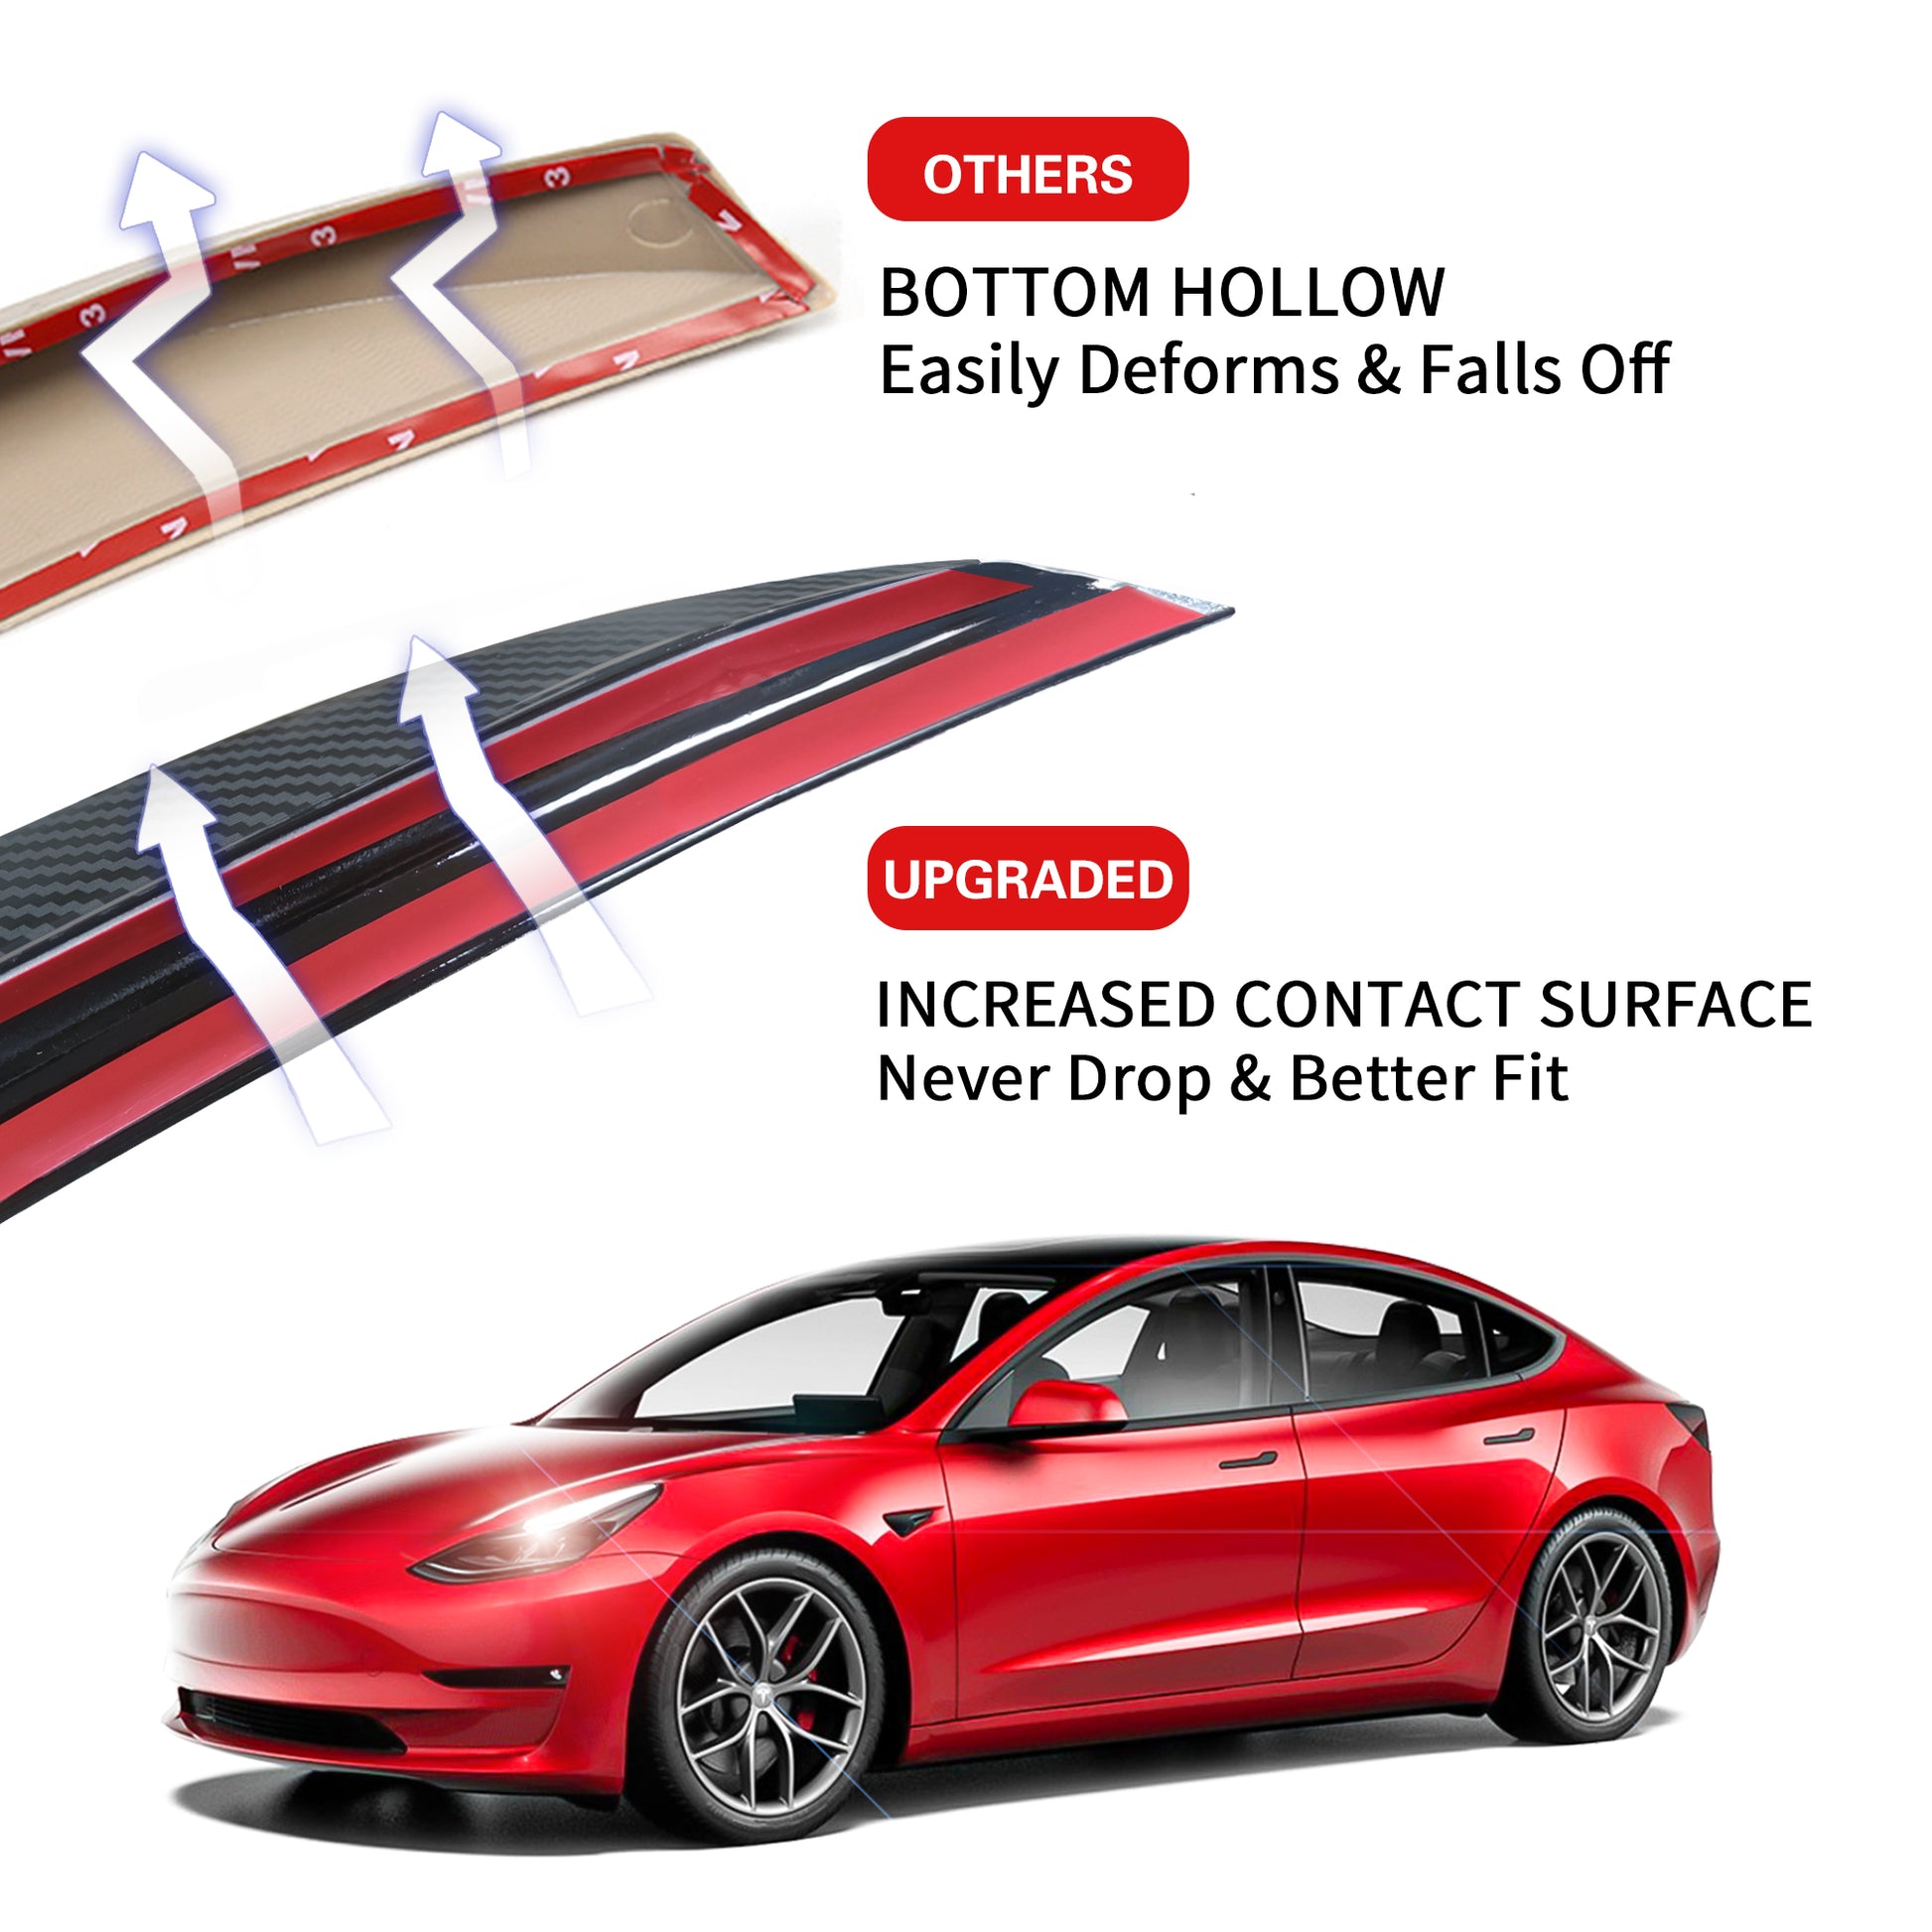 Car ABS Spoiler Carbon fiber pattern For Tesla 2024 Model 3 highland  Original High-performance Exterior Modification Accessories - AliExpress